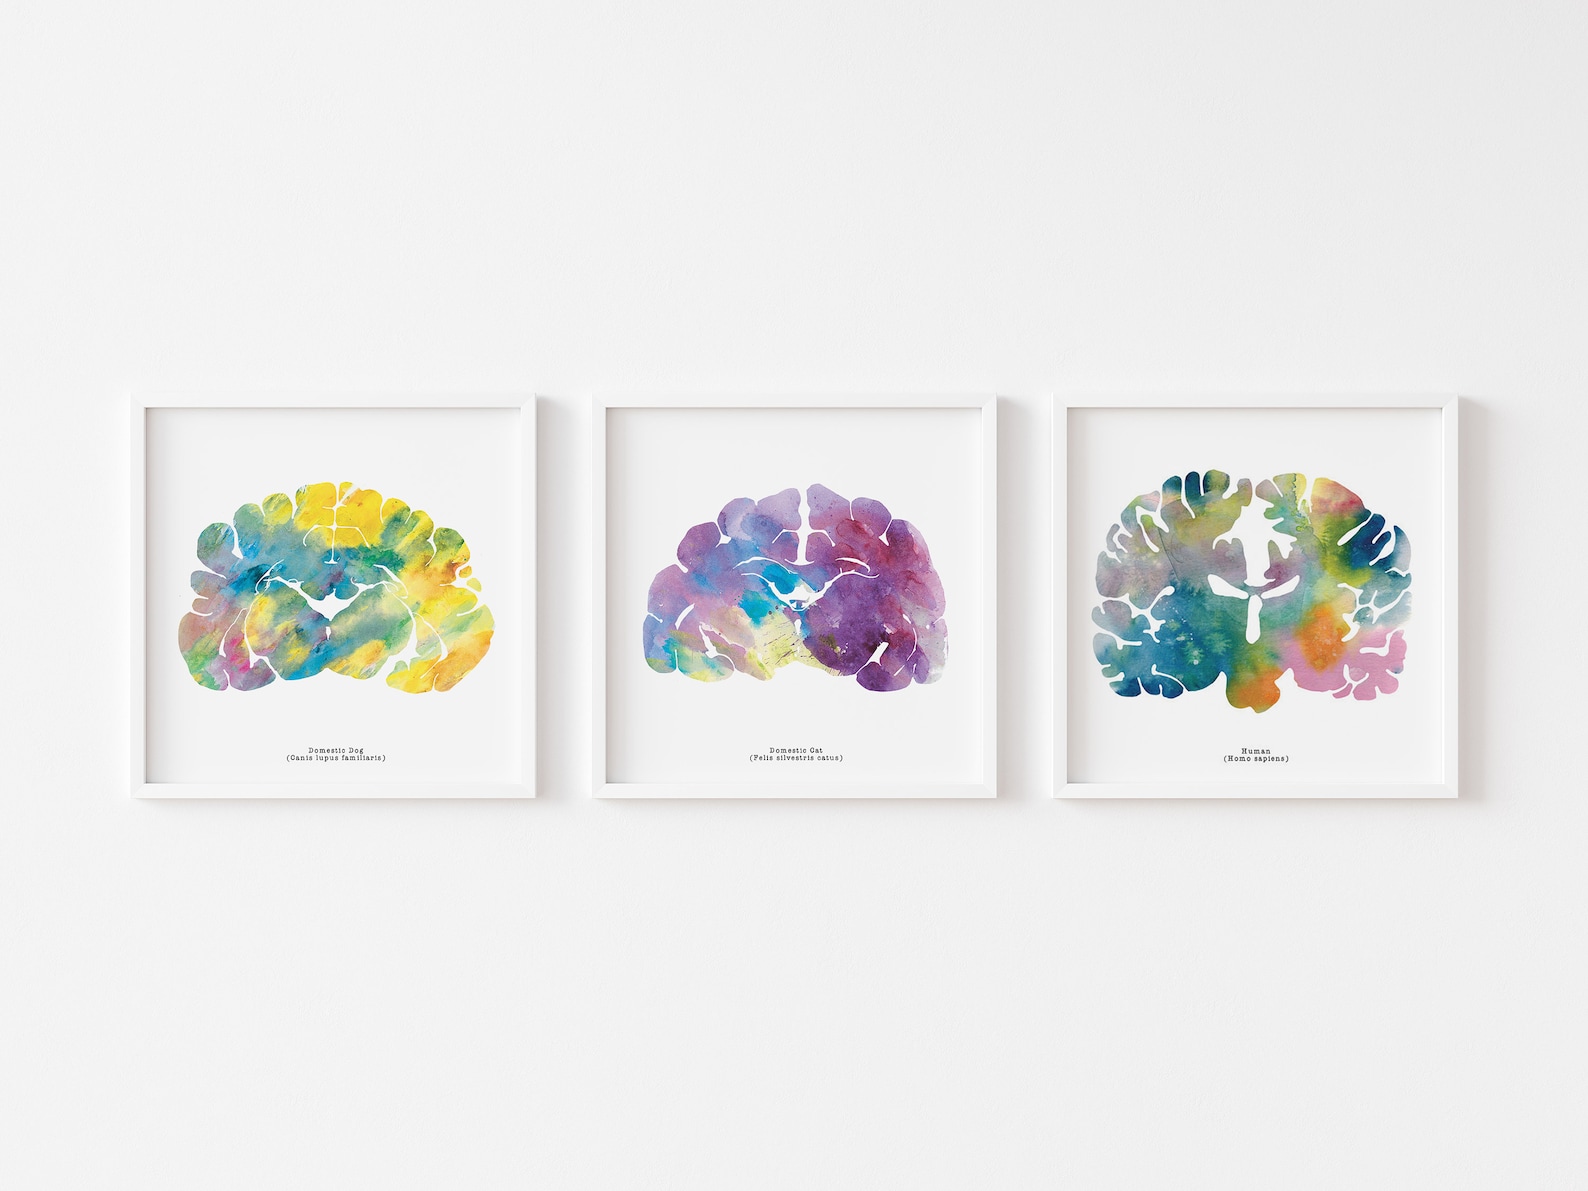 Veterinary Artwork - Human Cat Dog Brain Art - Three 12" x 12" Prints - Neuroscience, Neurology, Psychology Artwork - Great Gift for Grads